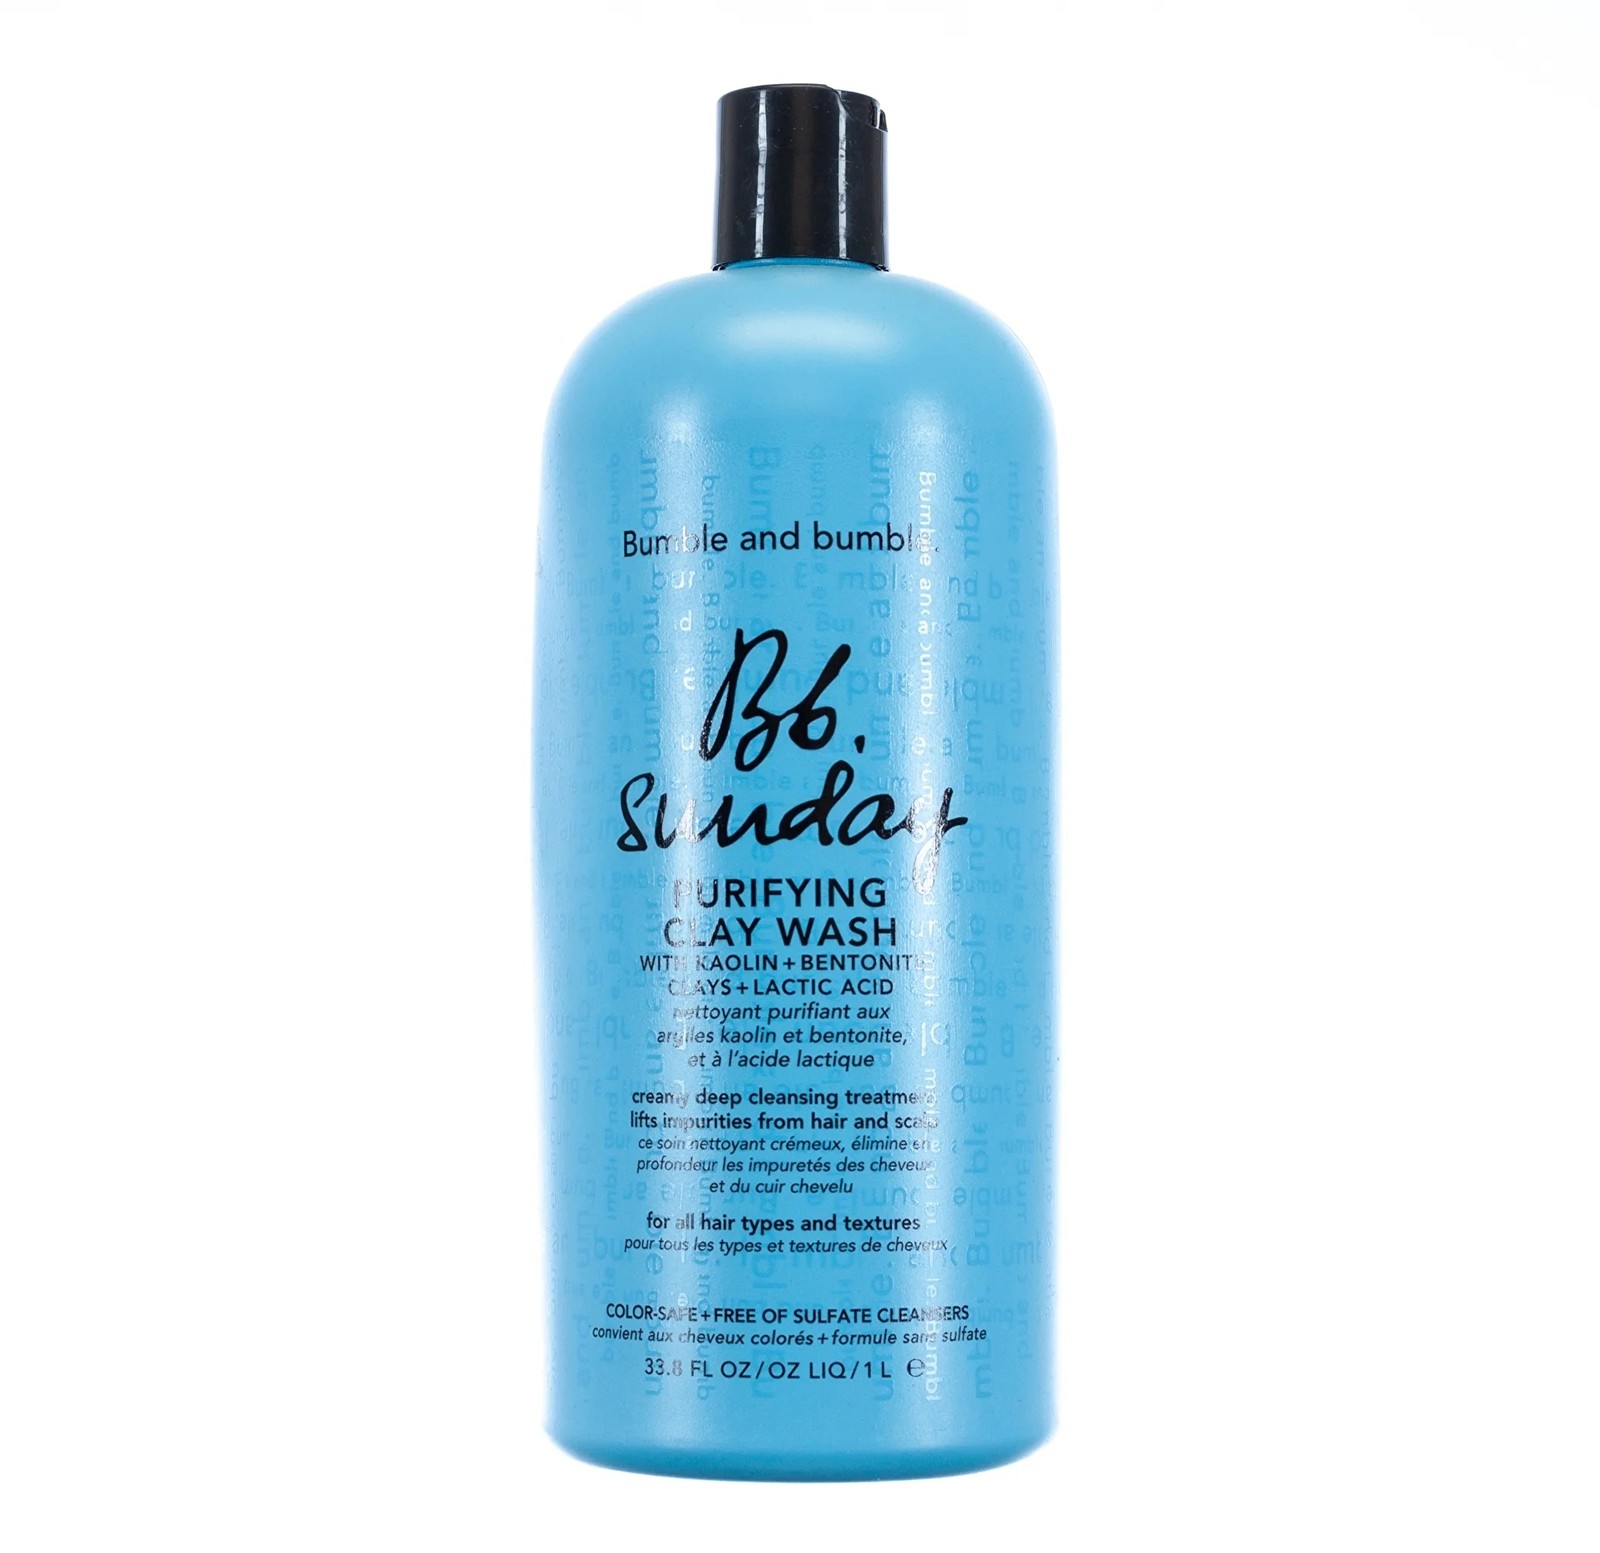 Bumble and bumble Detoxikační šampon Bb. Sunday (Purifying Clay Wash) 1000 ml